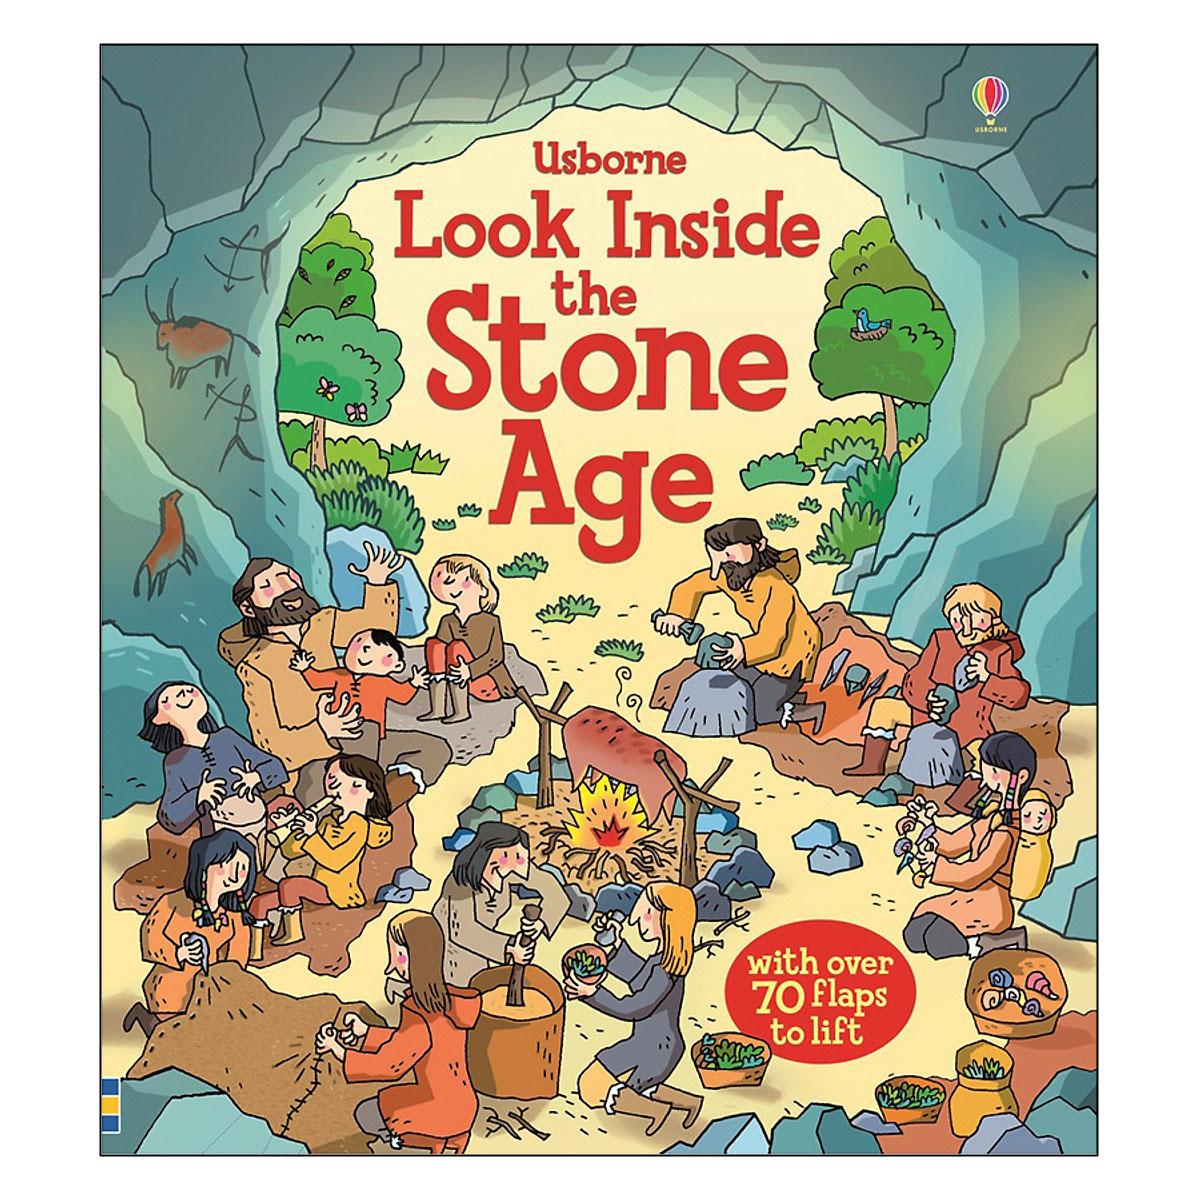 Sách tương tác tiếng Anh - Usborne Look inside Stone Age